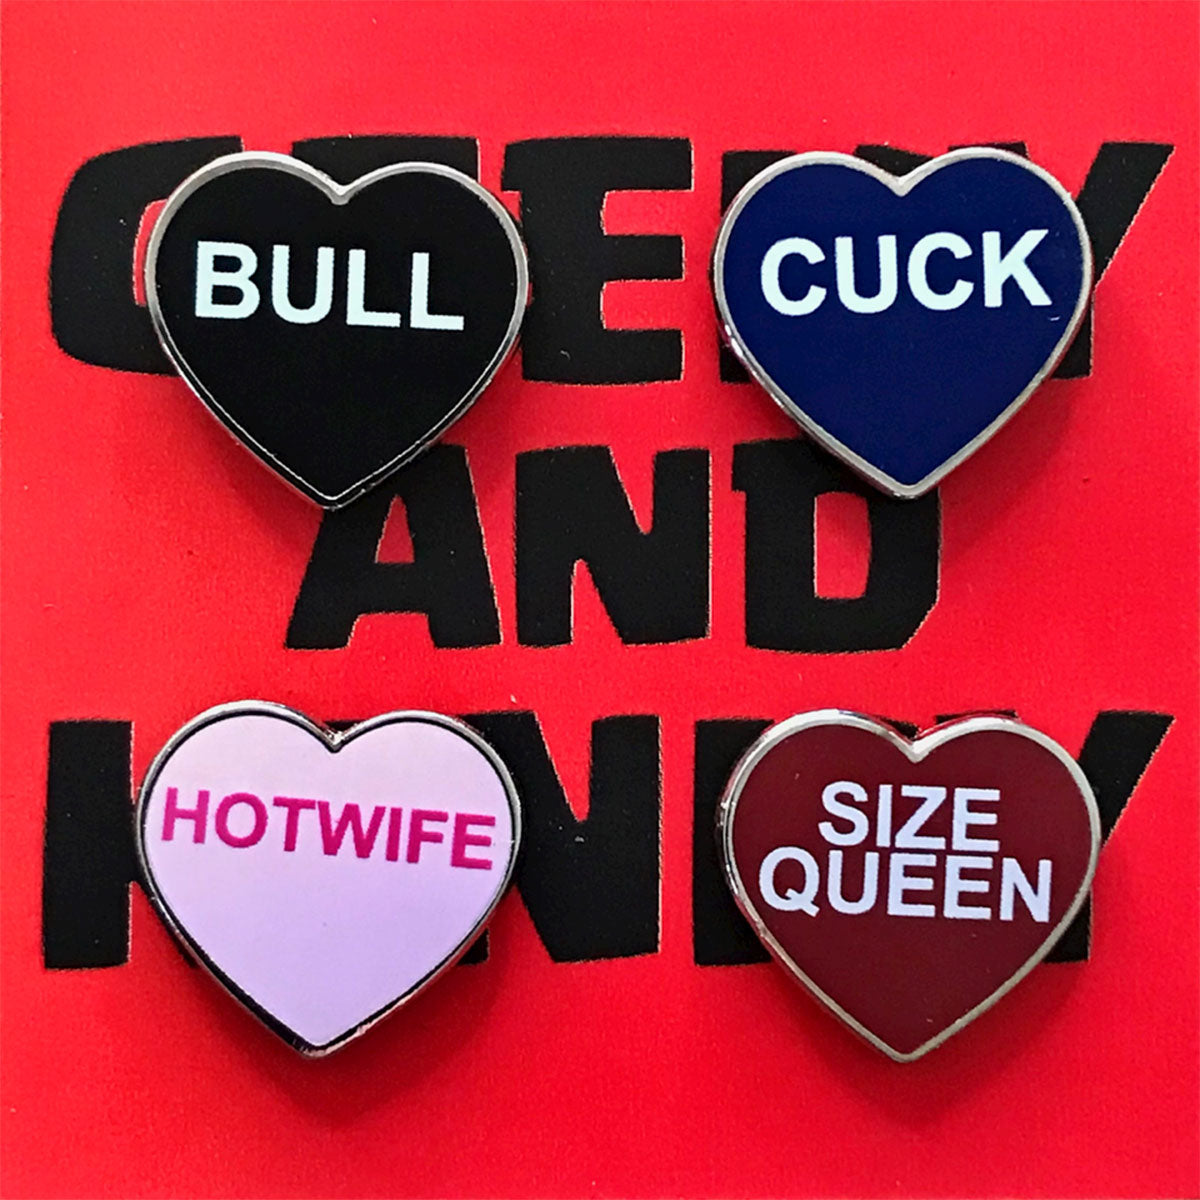 Geeky & Kinky Heart Pin 4pk (Cuck - Bull - Hot Wife - Size Queen)